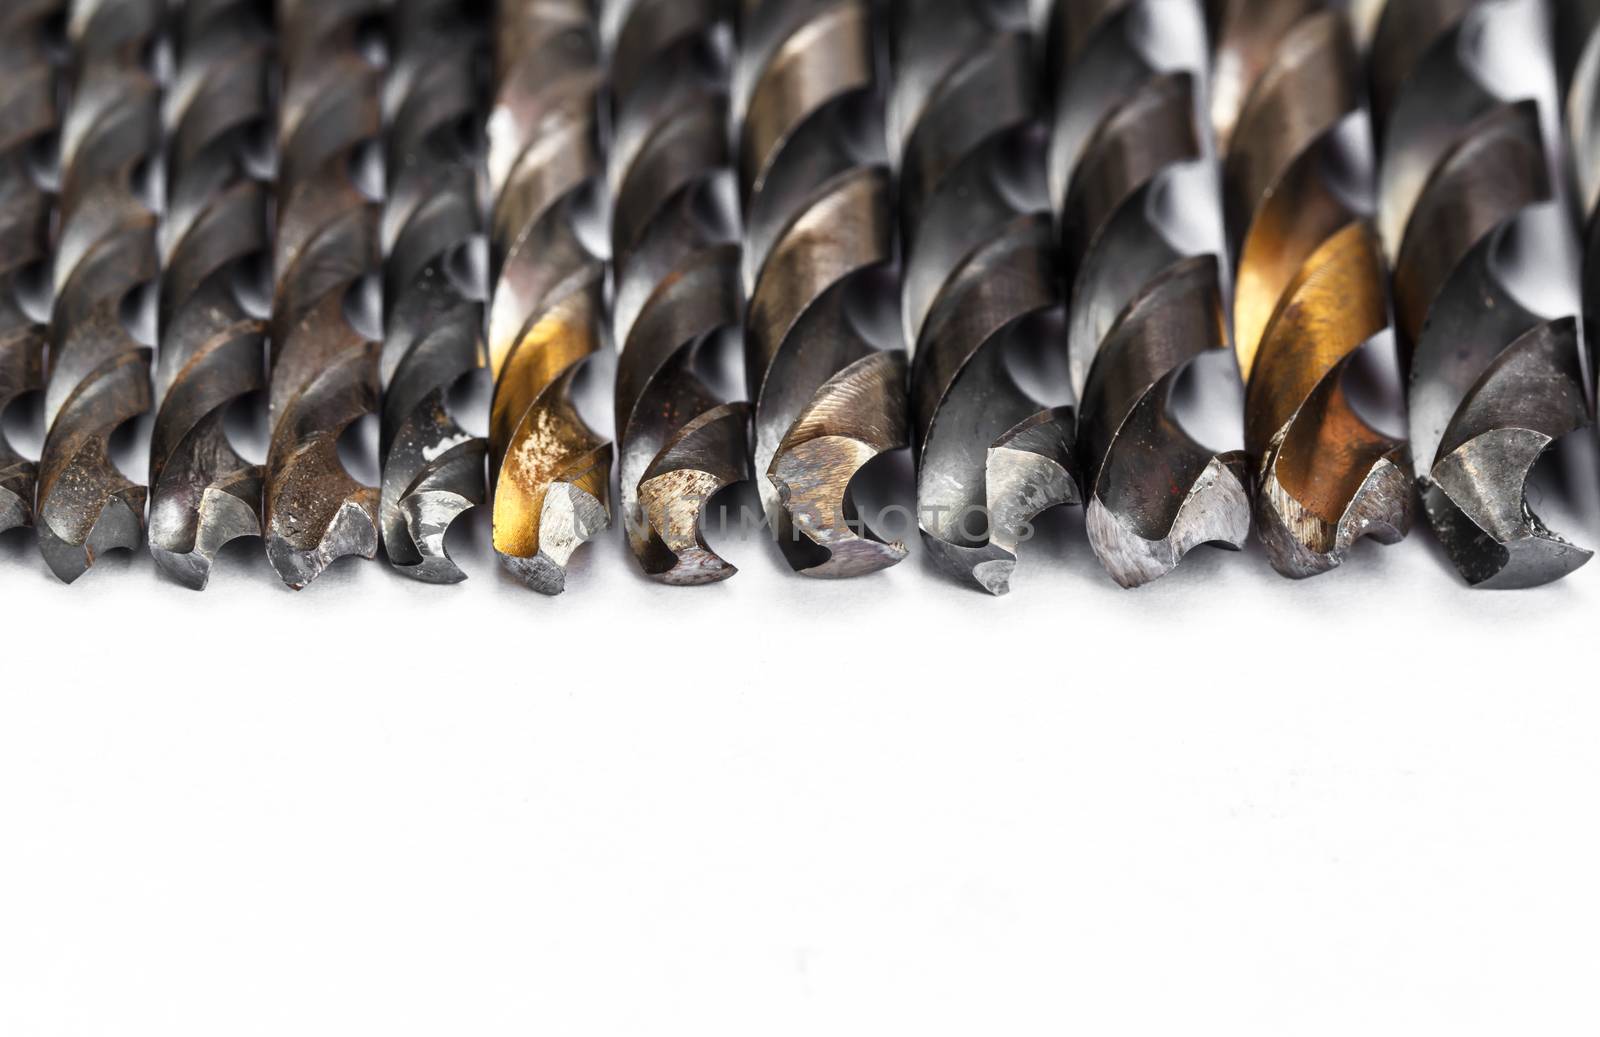 Metal drill bits by Praphan